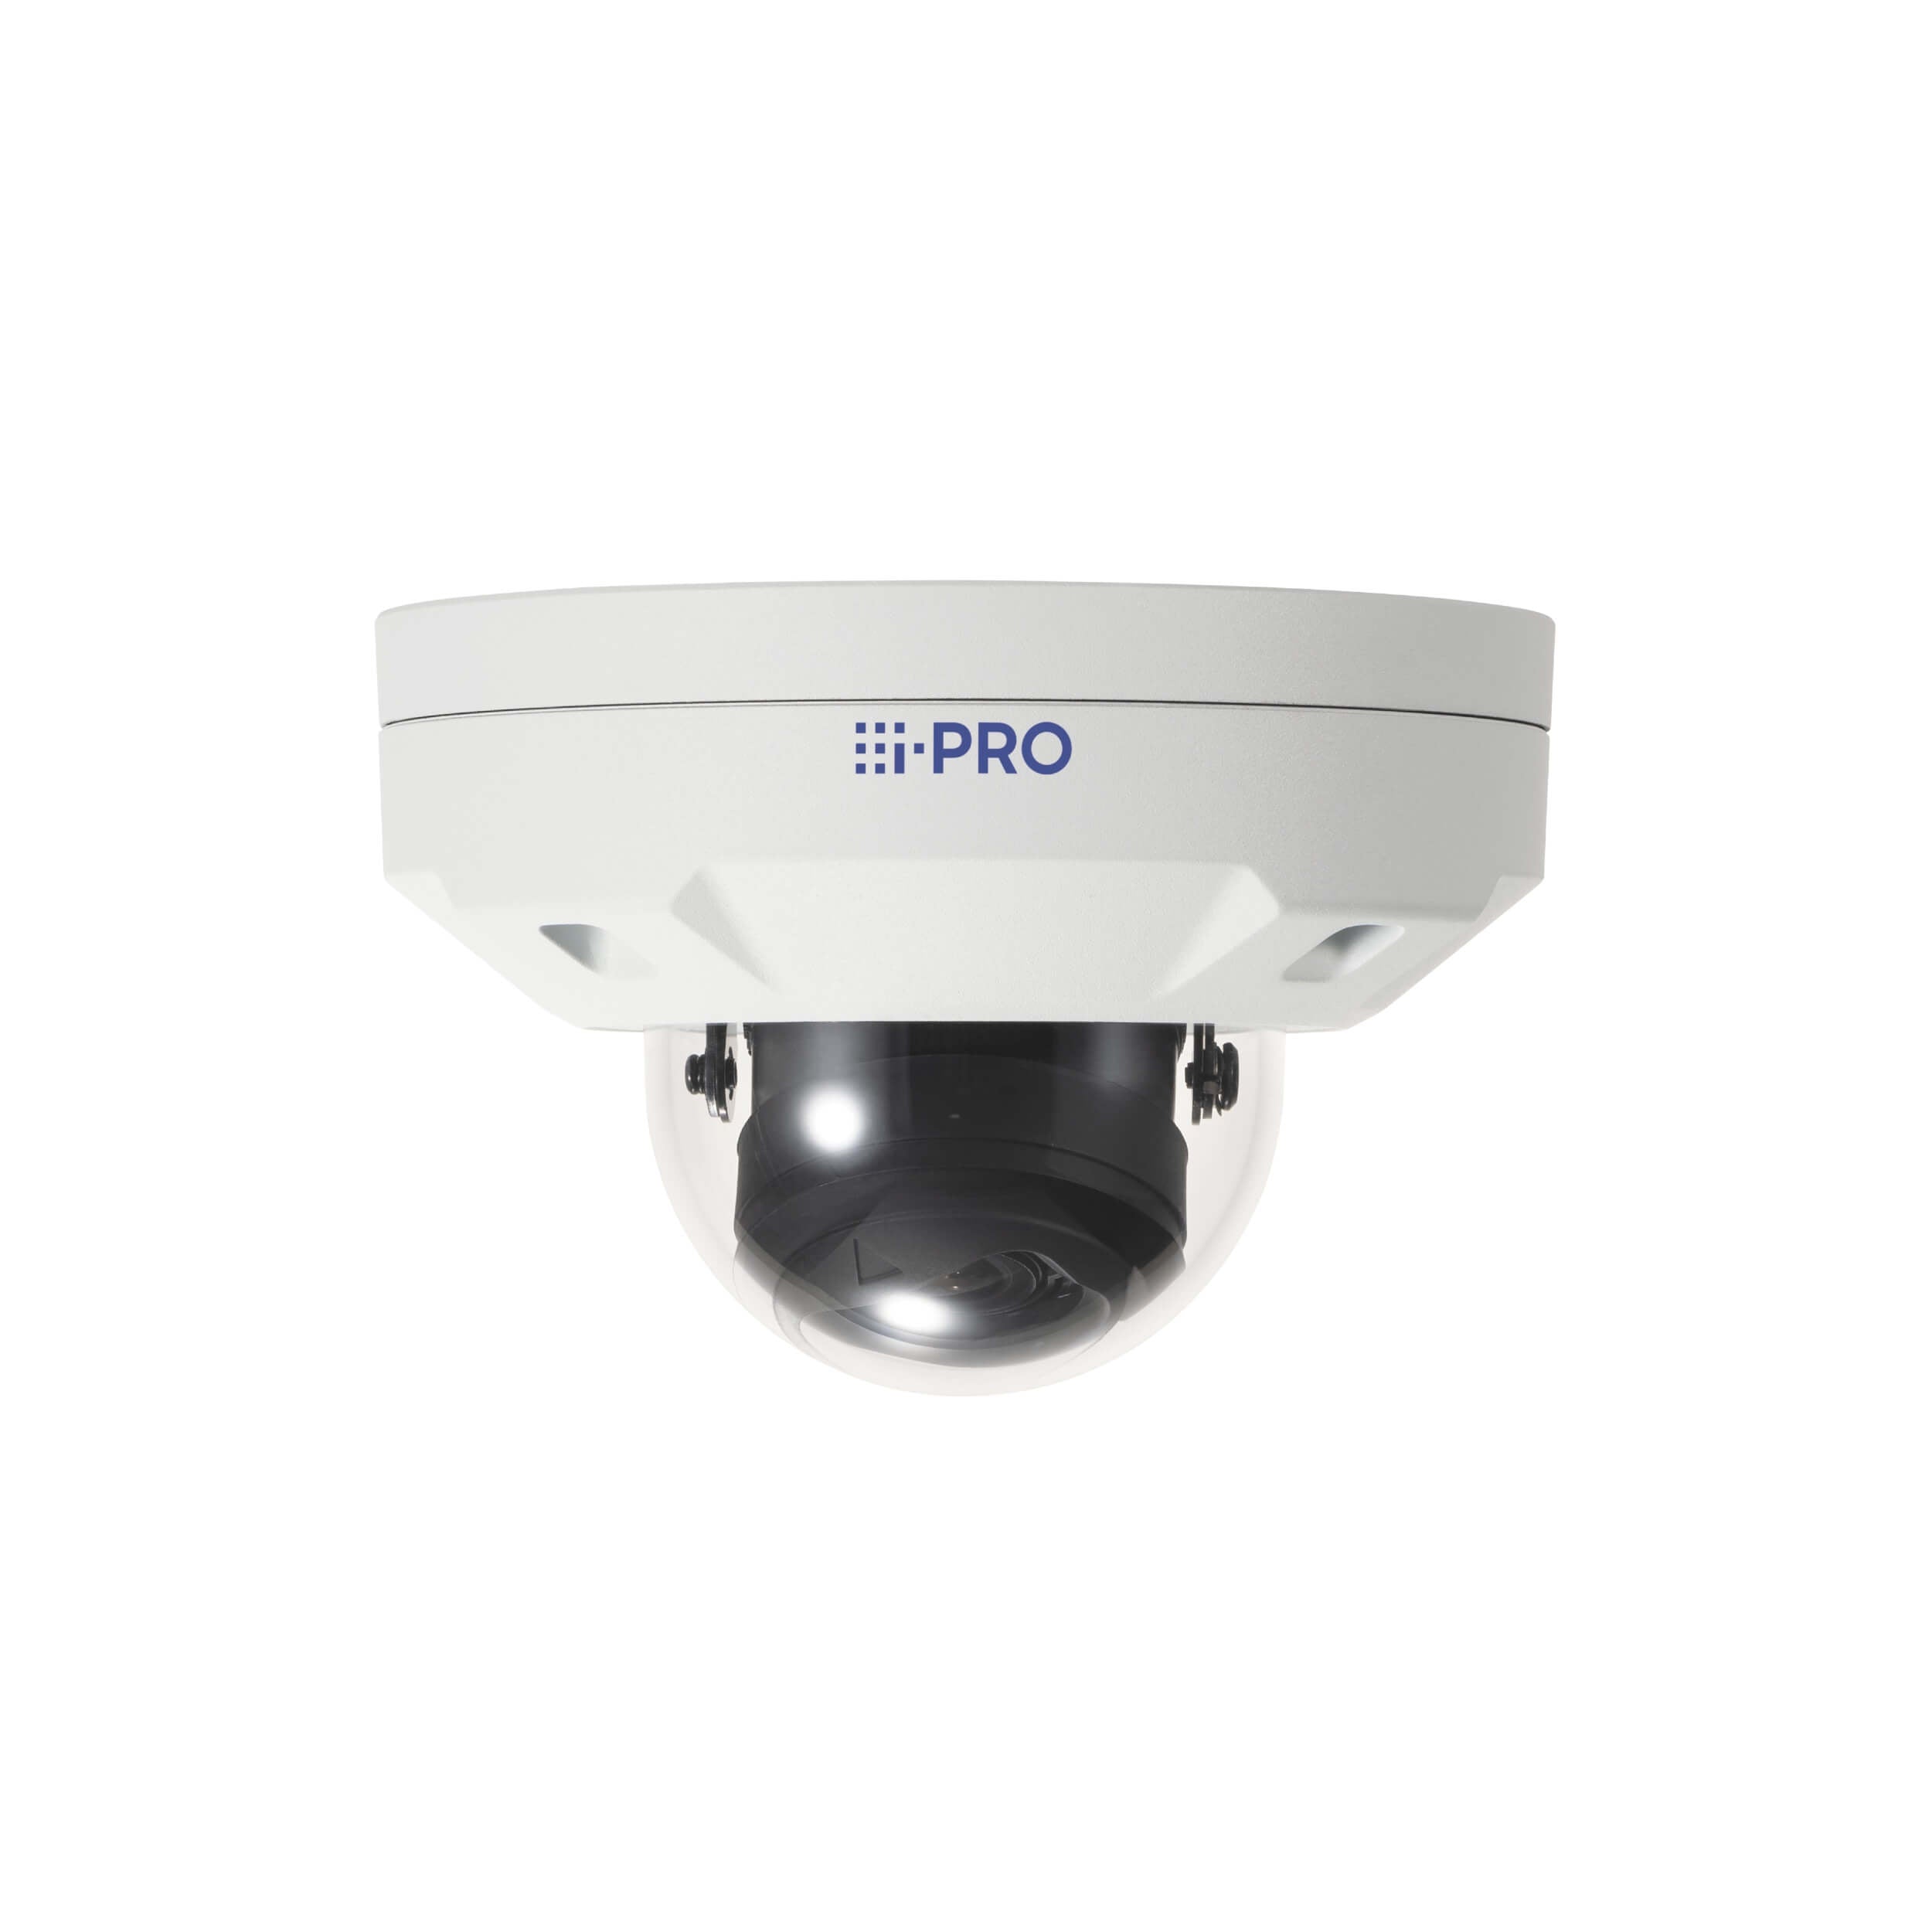 i-PRO WV-S2536LNA 2MP Vandal Resistant Outdoor Dome Network Camera